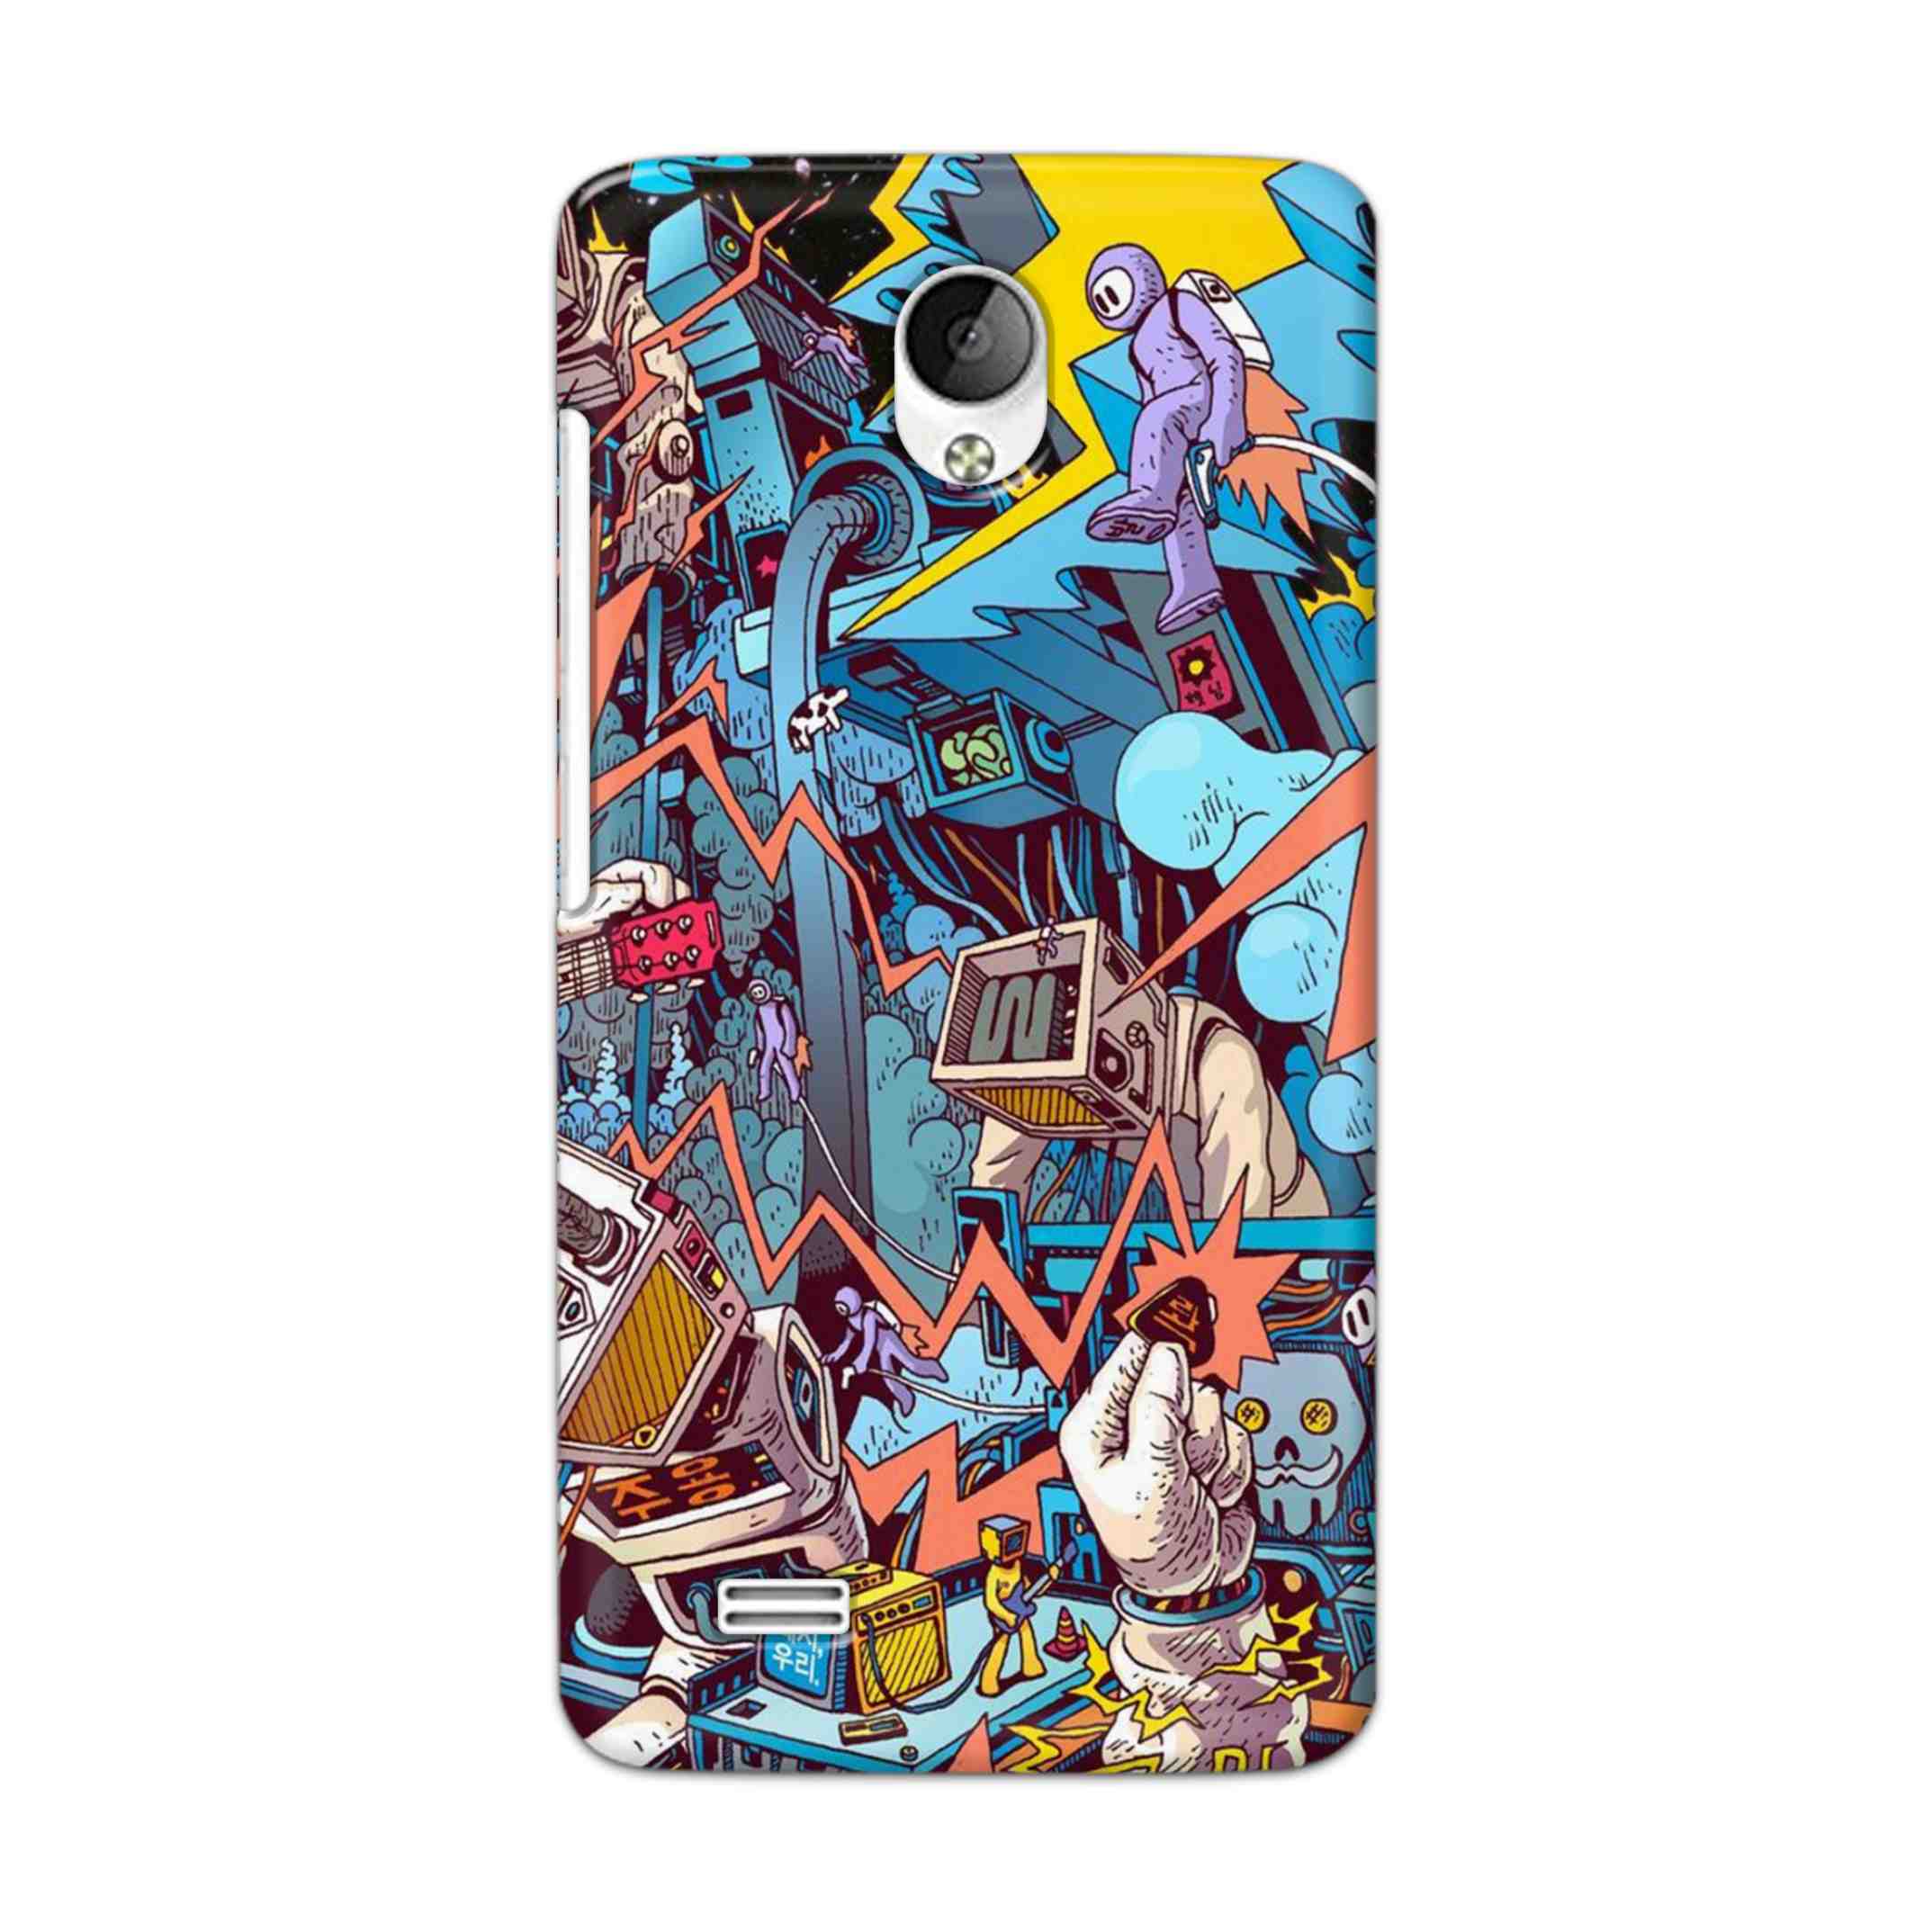 Buy Ofo Panic Hard Back Mobile Phone Case Cover For Vivo Y21 / Vivo Y21L Online